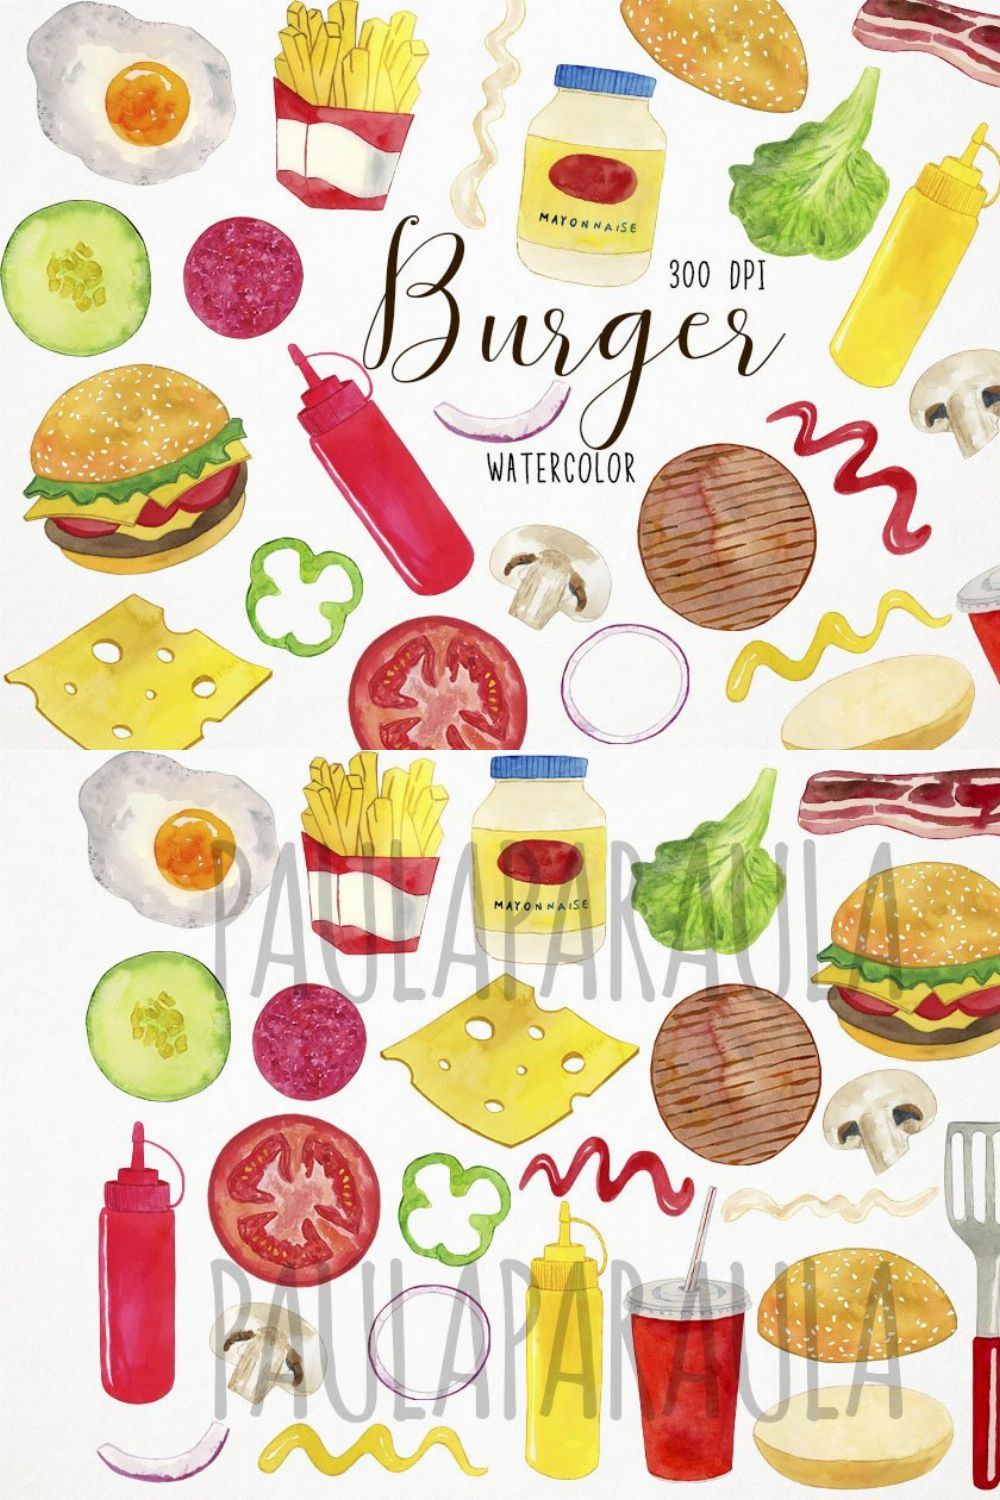 Watercolor Burger Clipart, Bbq pinterest preview image.